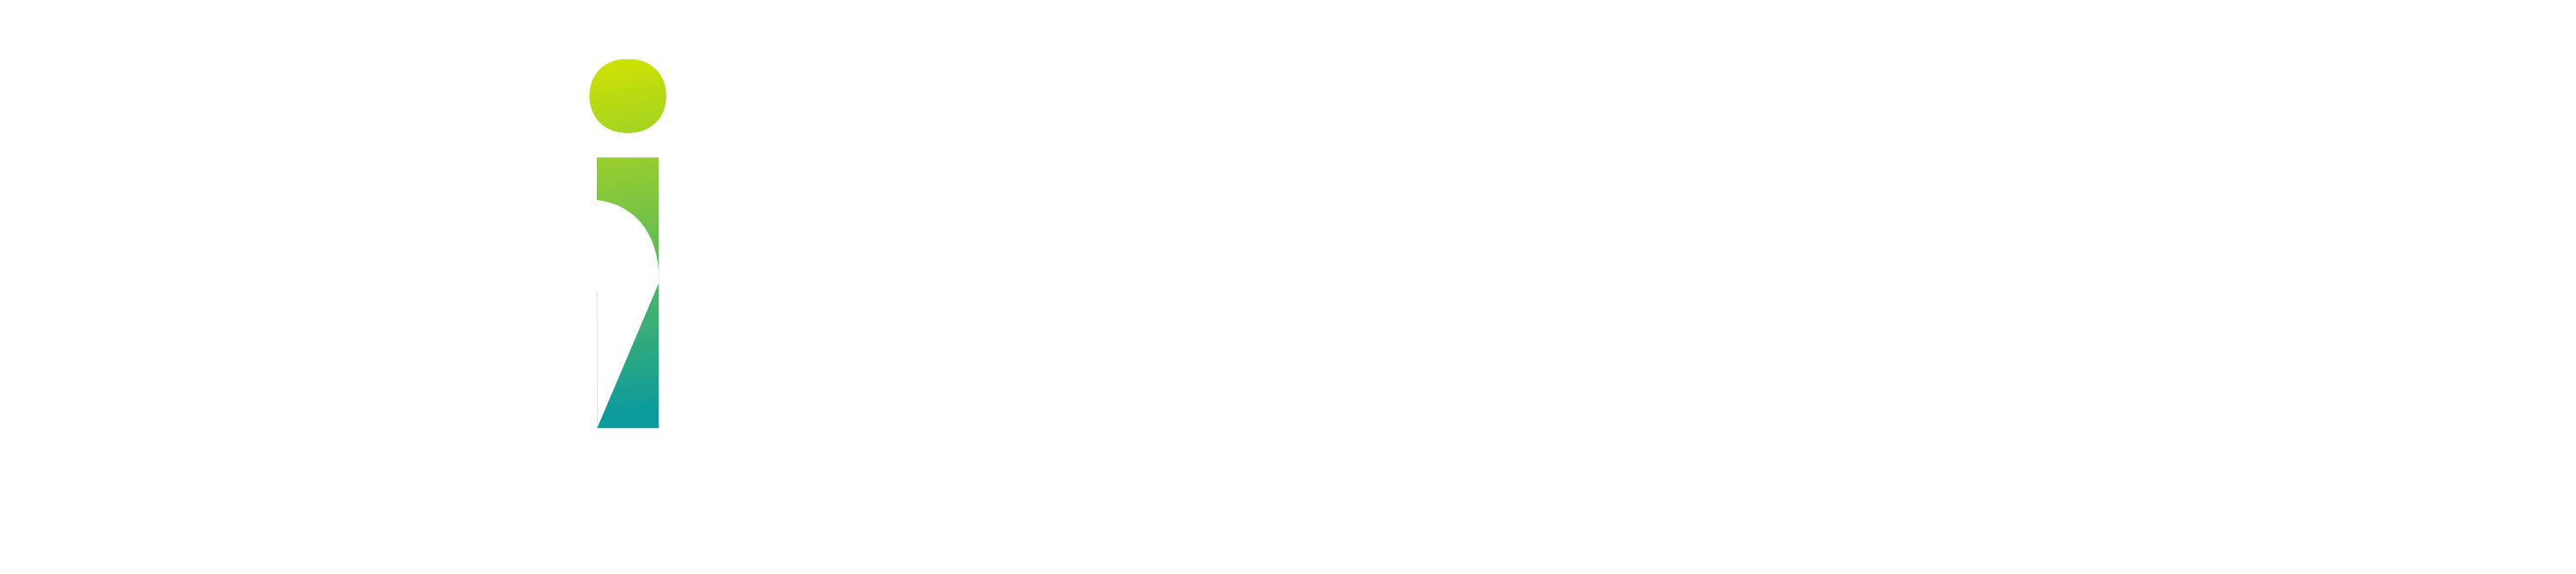 AmICompliant Logo